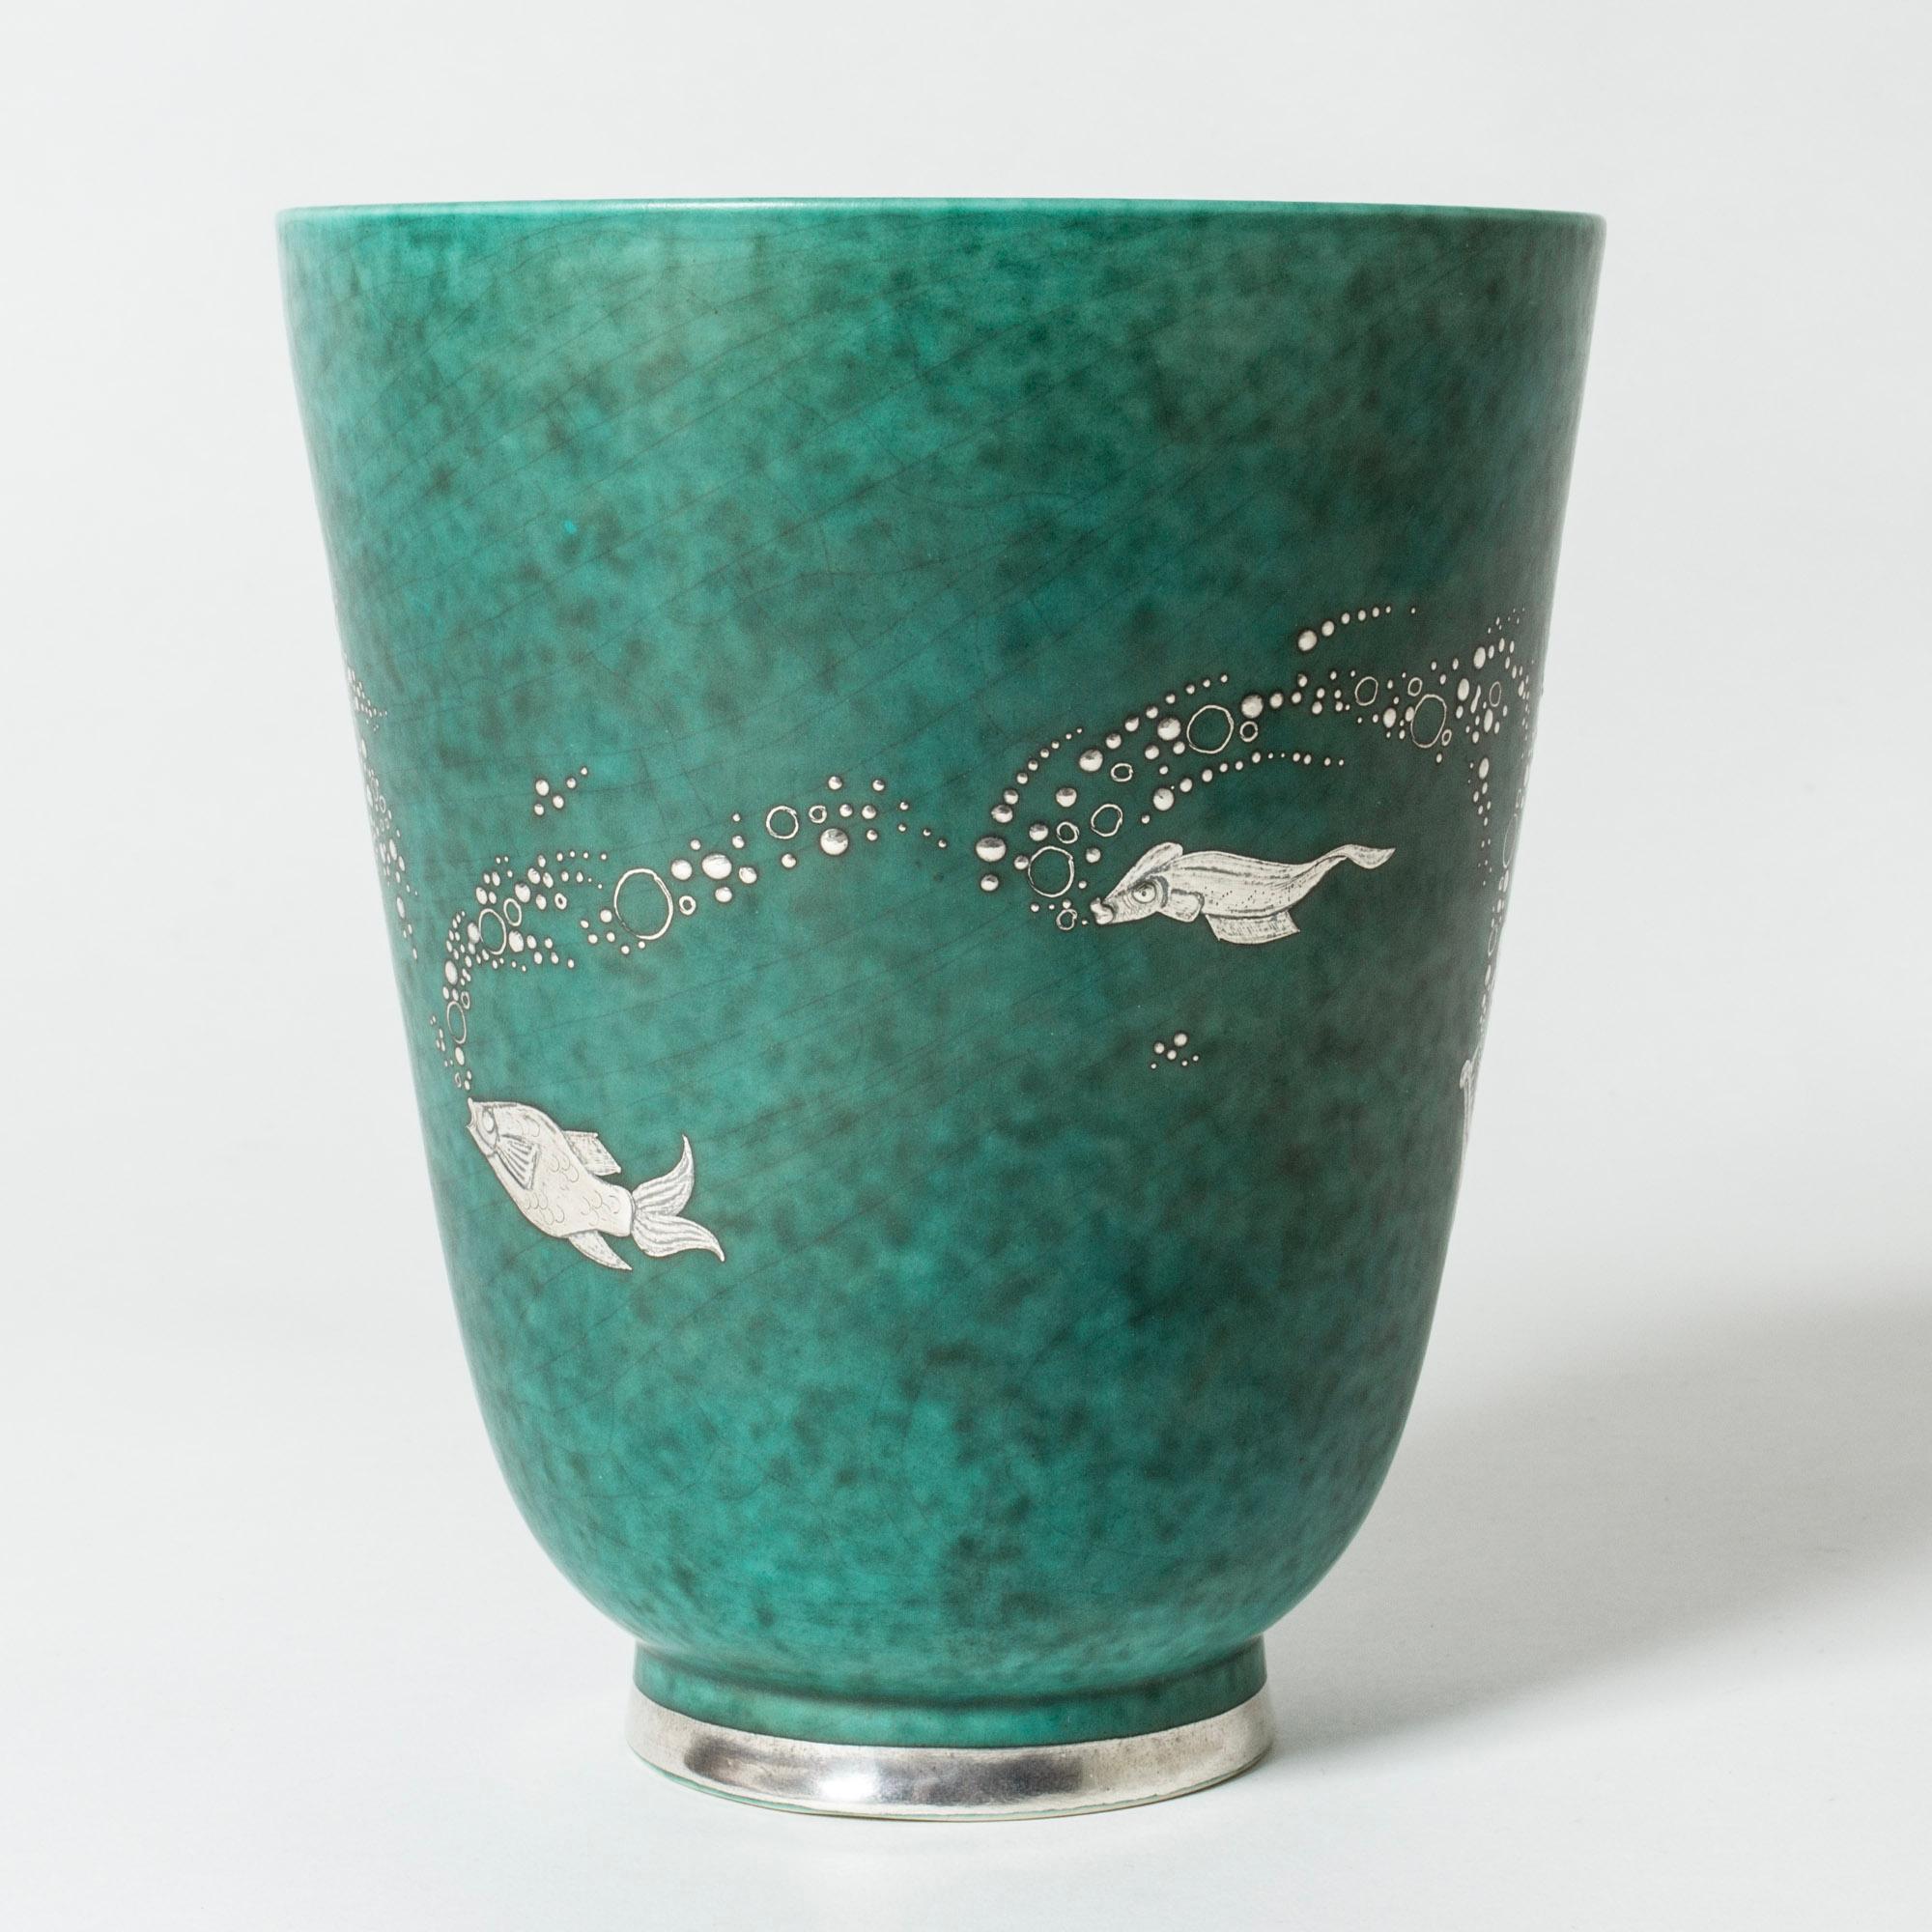 Swedish Midcentury Stoneware “Argenta” Vase by Wilhelm Kåge, Gustavsberg, Sweden, 1940s For Sale